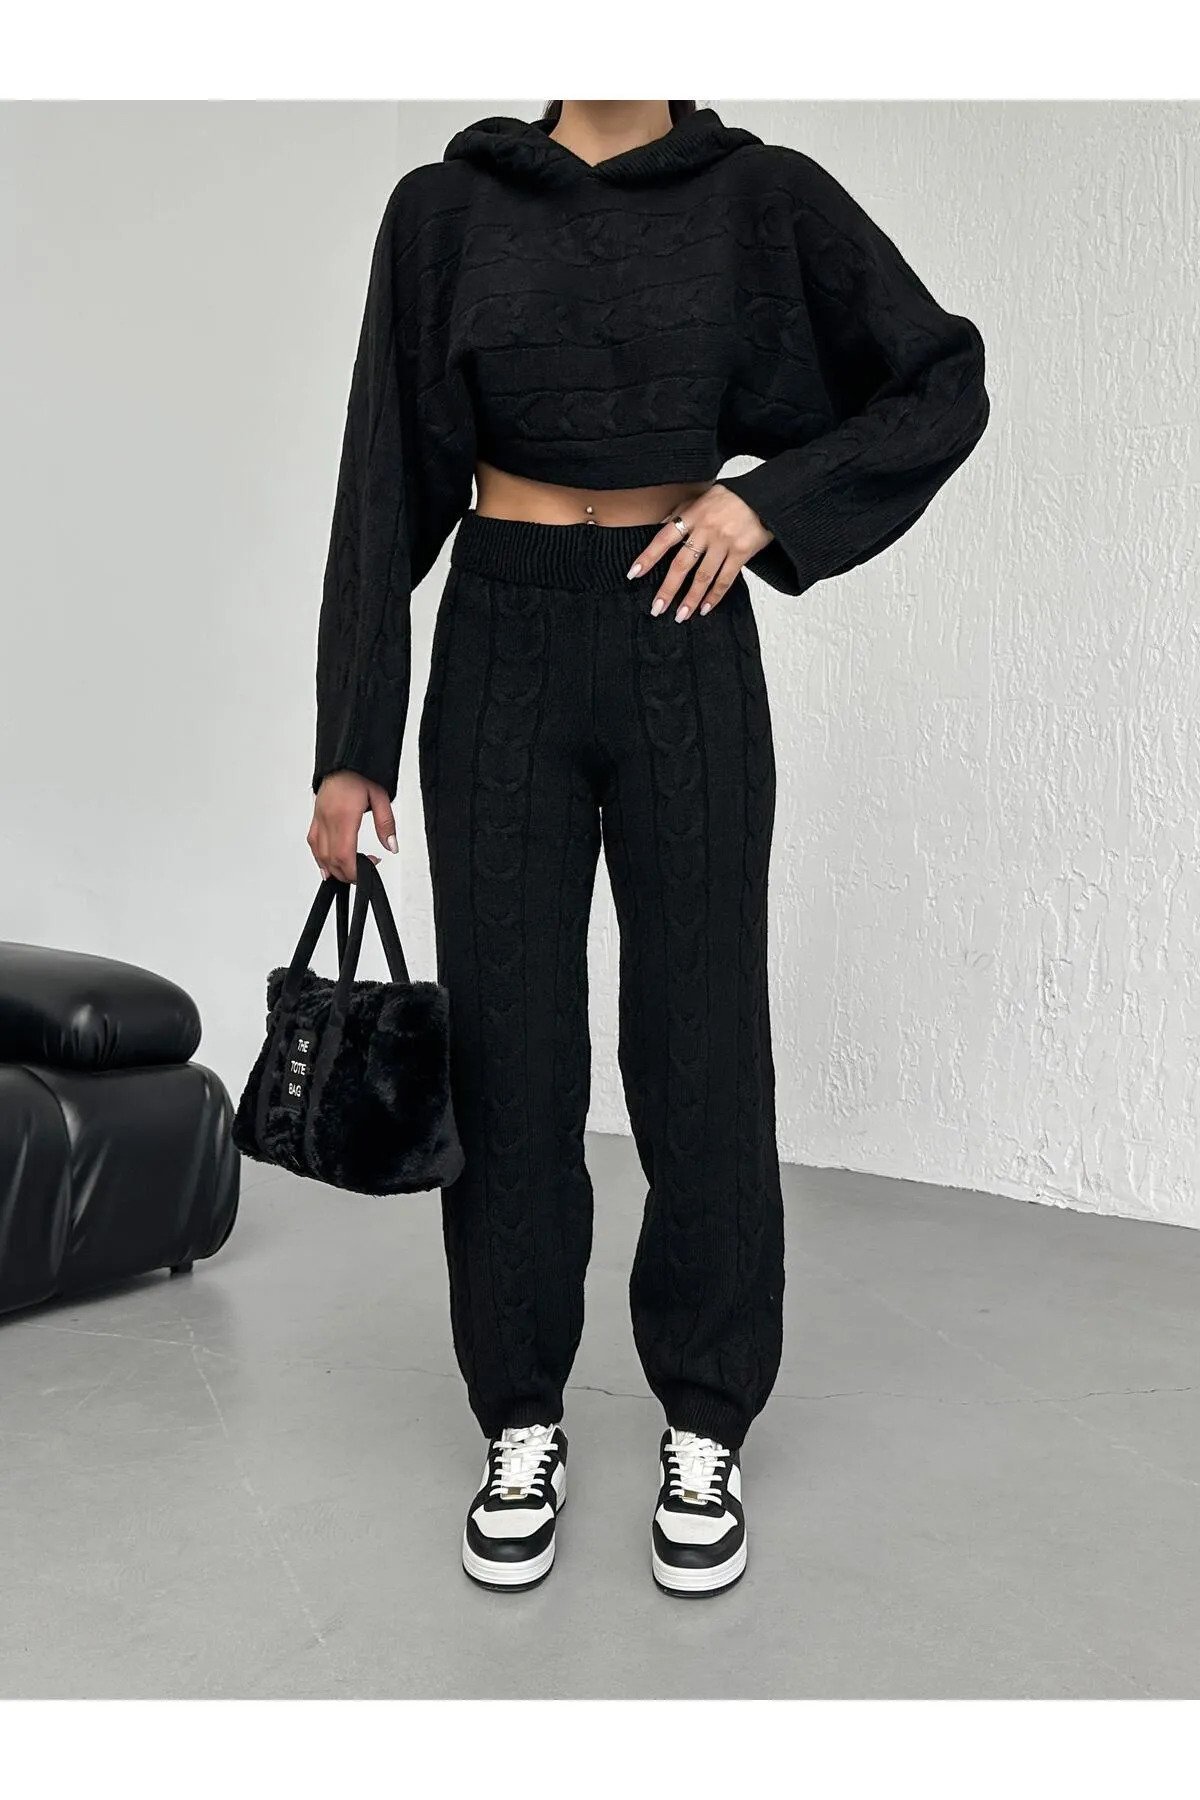 Laluvia Black Hooded Waist Leg Elastic Knitted Crop Knitwear Suit